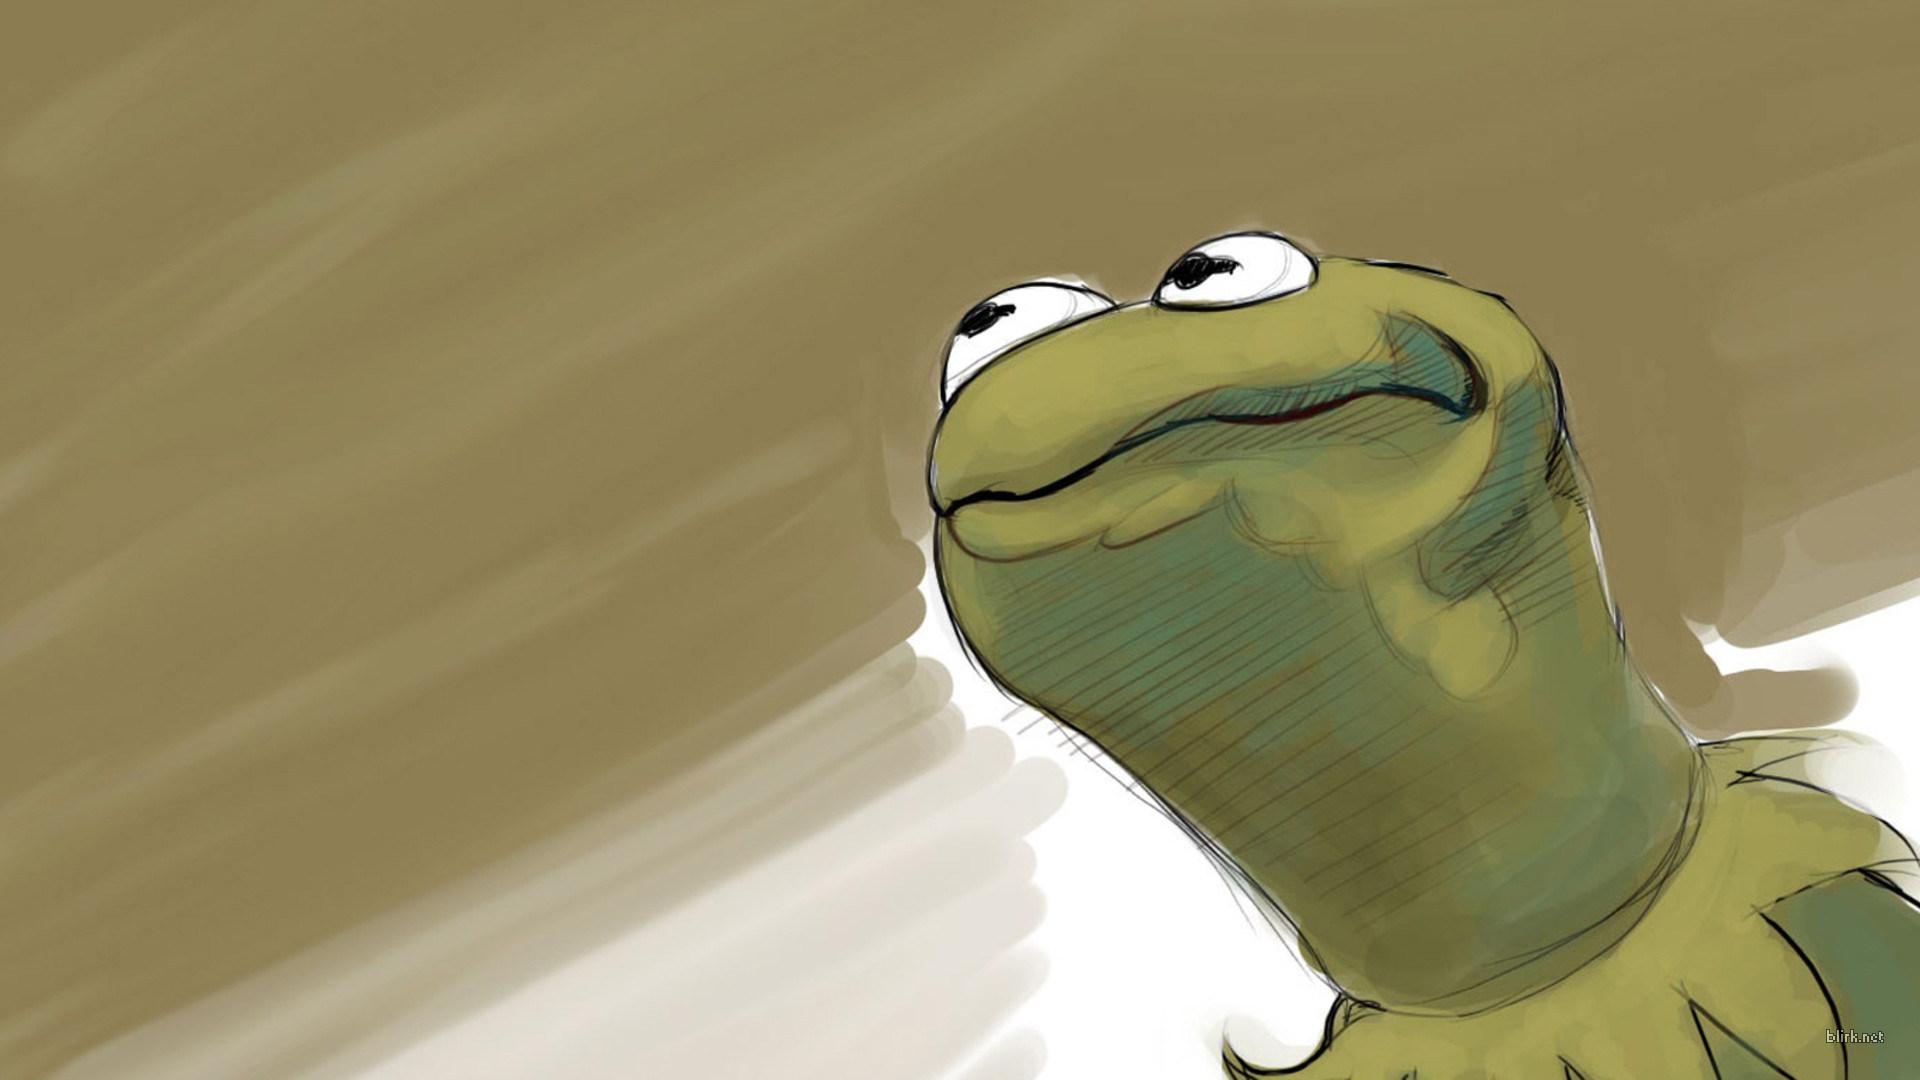 meme, Sesame Street, Kermit the Frog - desktop wallpaper